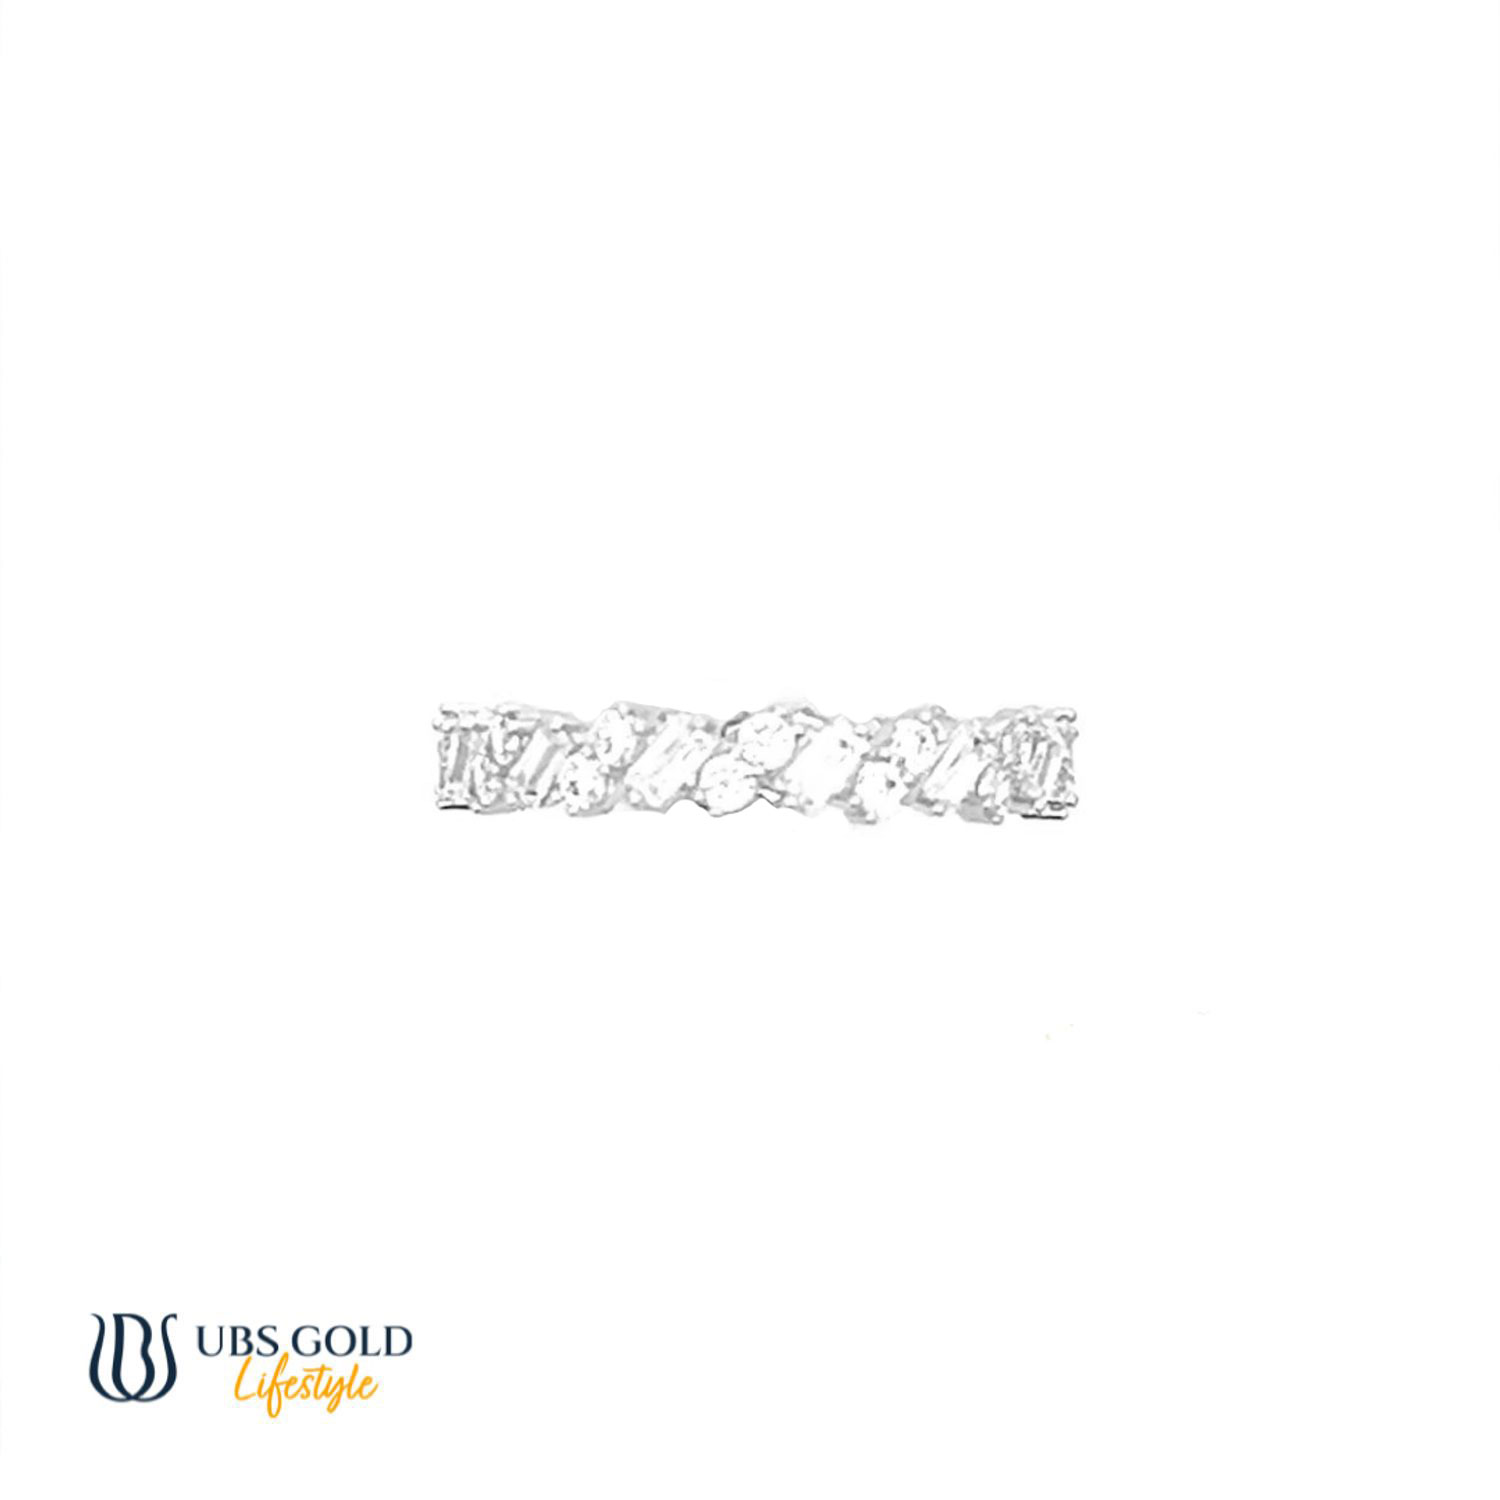 UBS Gold Cincin Emas Eterna - Cc16921 - 17K